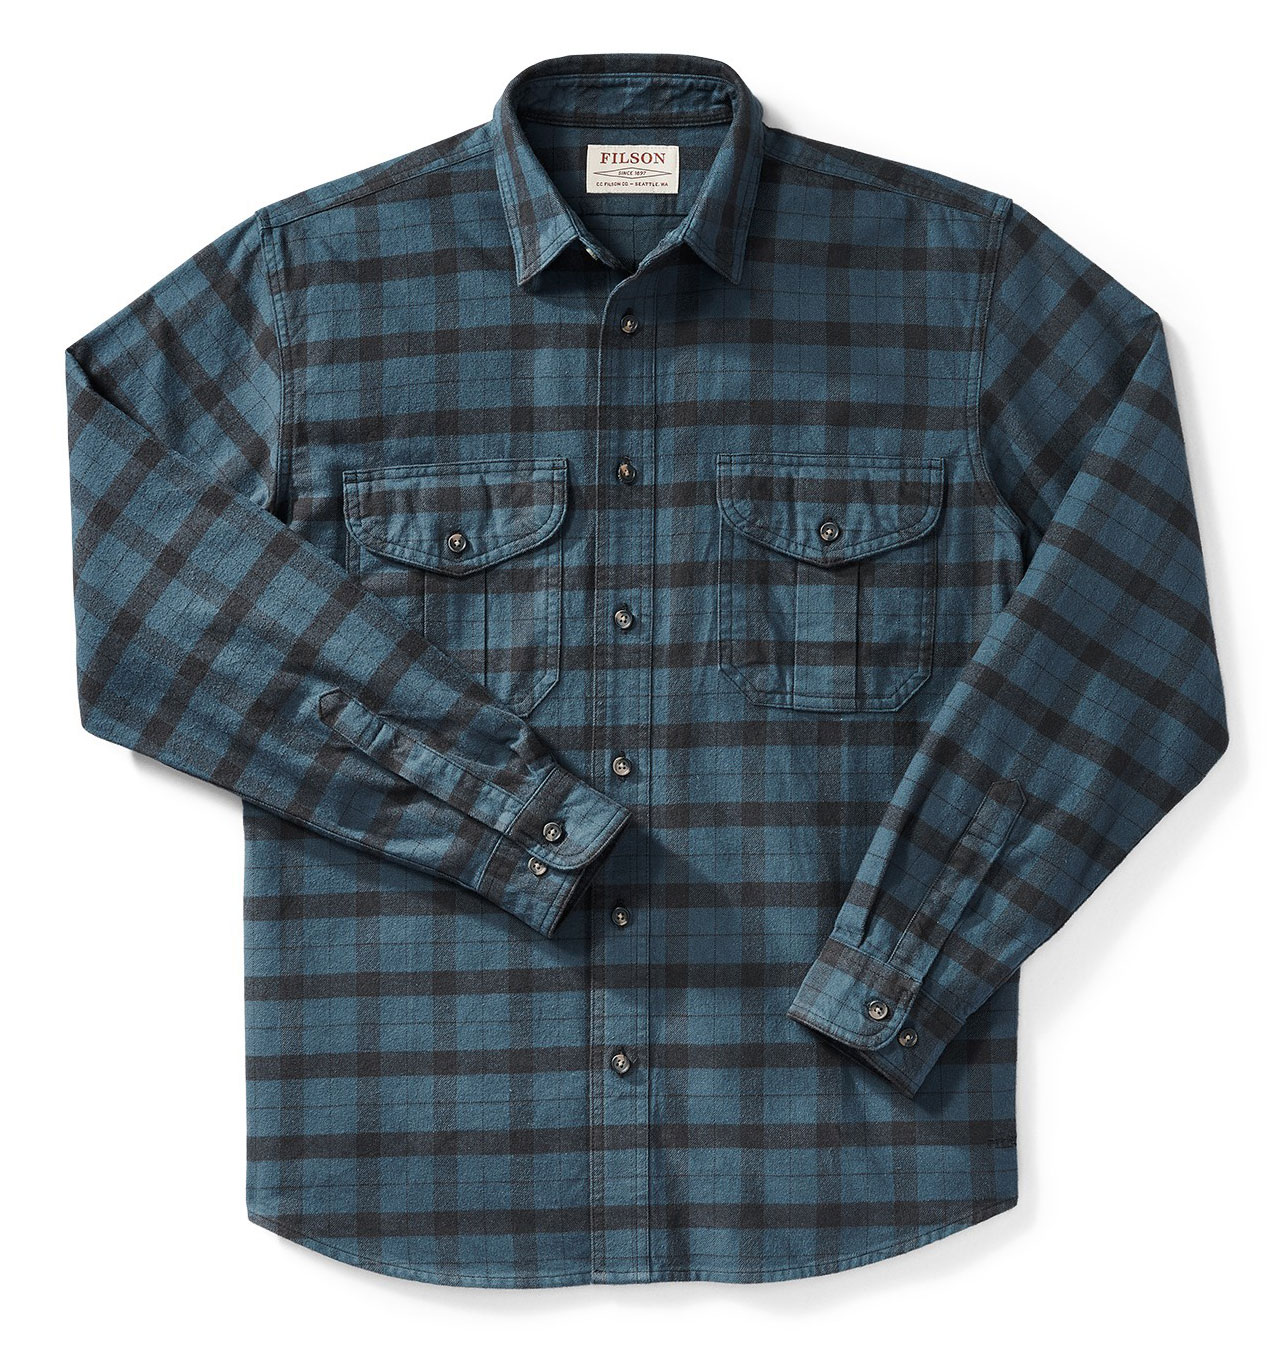 Filson - Alaskan Guide Flannel Shirt - Midnight/Black